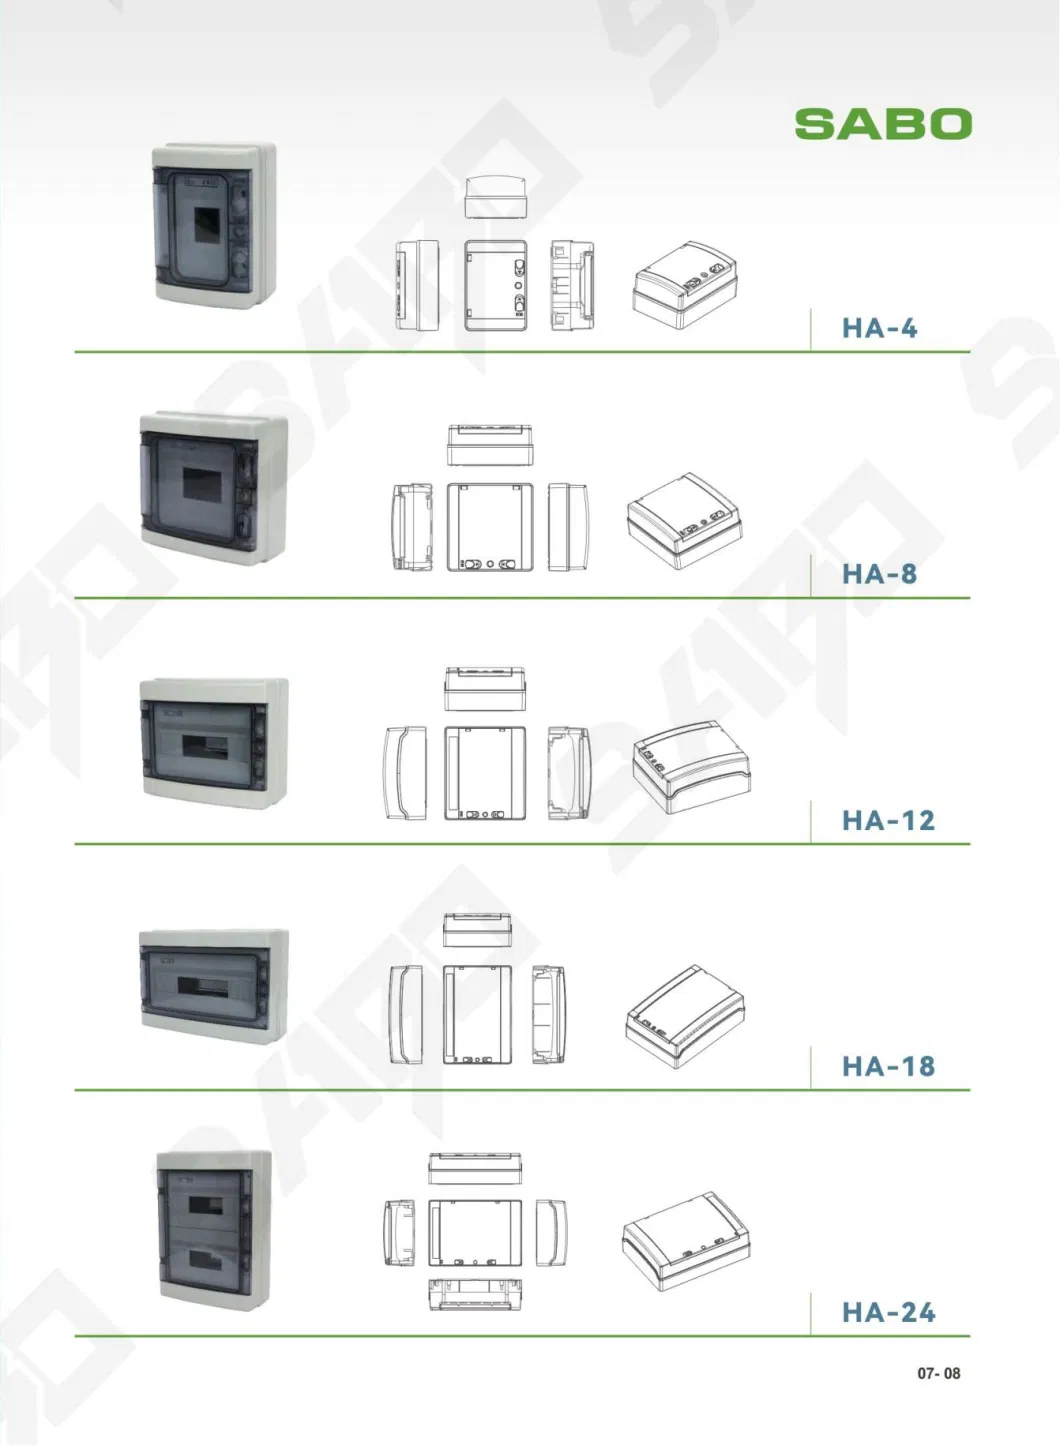 Sabo IP65 Waterproof Dustproof ABS Plastic Shell Combiner Box Electric Distribution Box Ha 4 to Ha 24 Ways